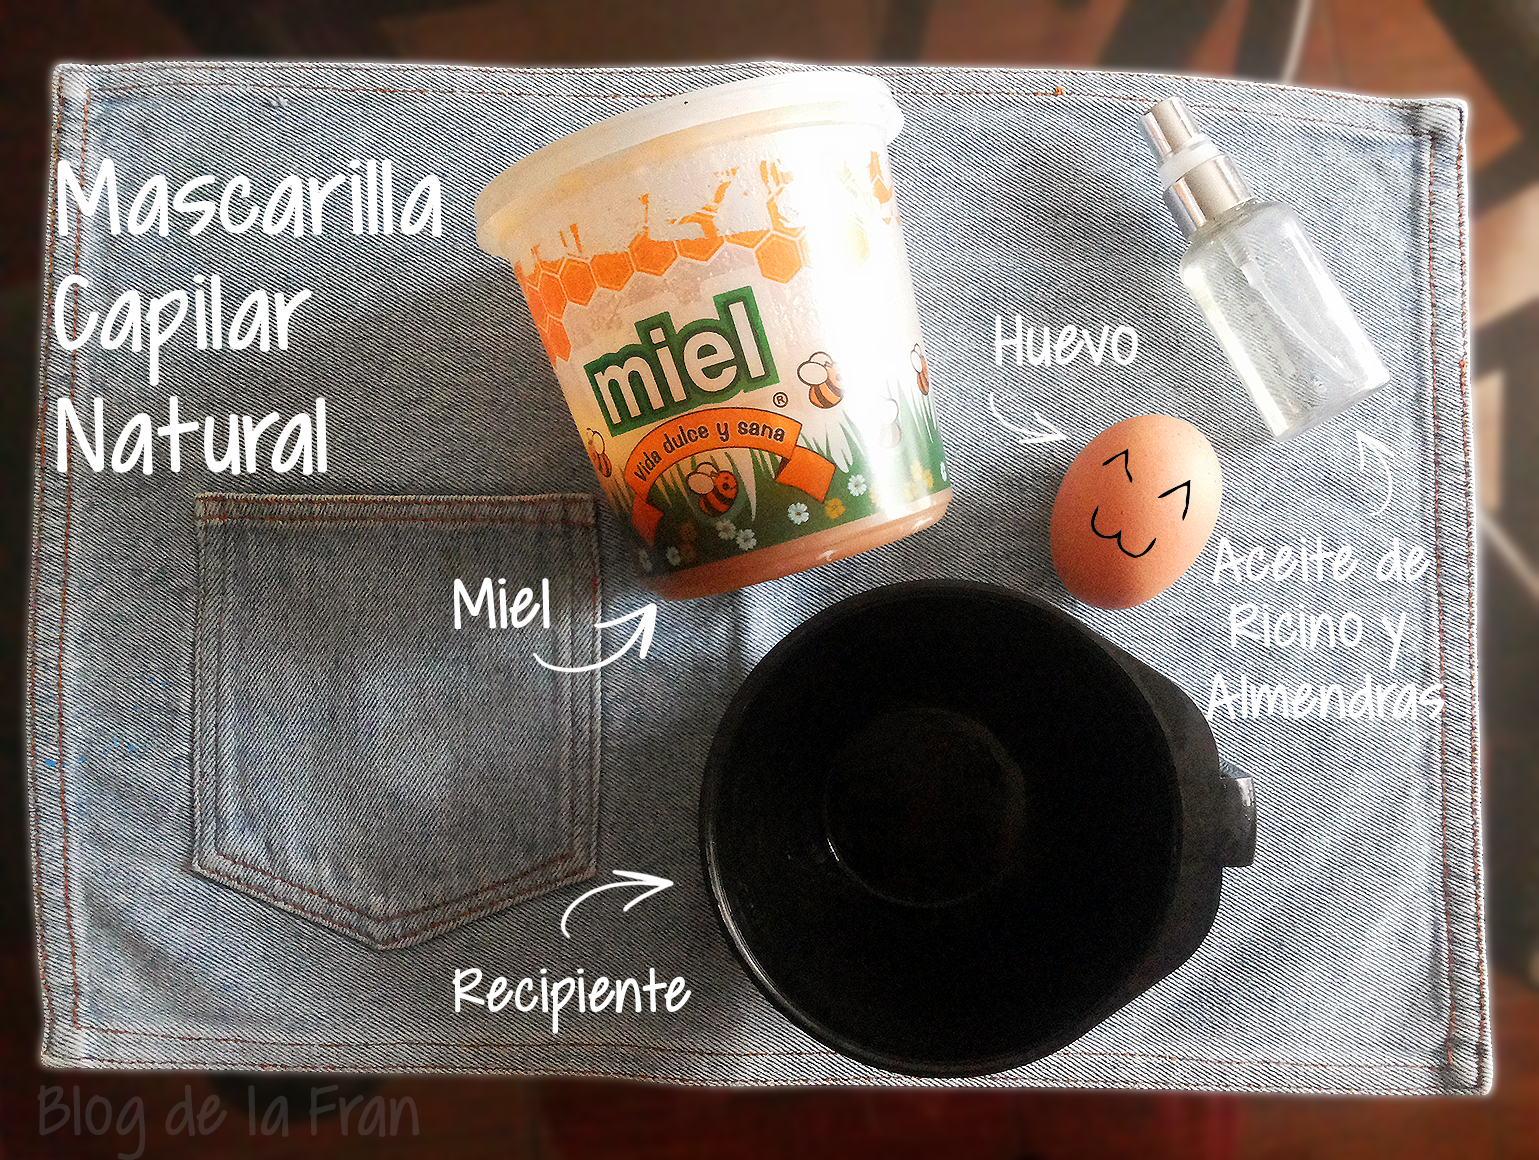 de la Fran - Ondulada con Onda: Mascarilla capilar natural de Miel, Huevo, Aceite de Ricino Almendras.